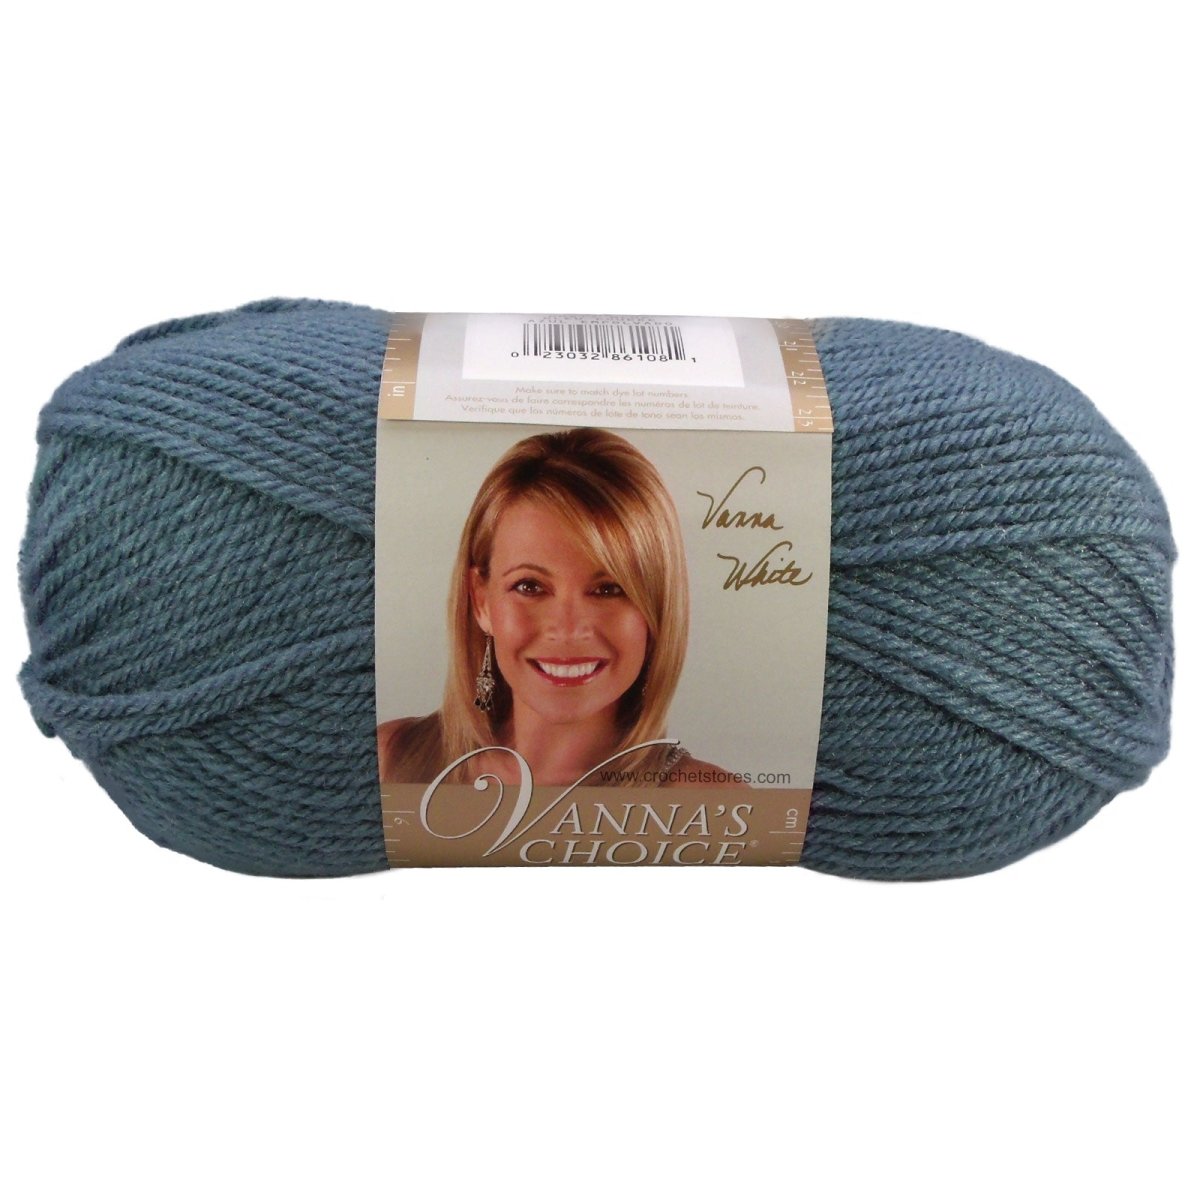 VANNAS CHOICE - Crochetstores860-108